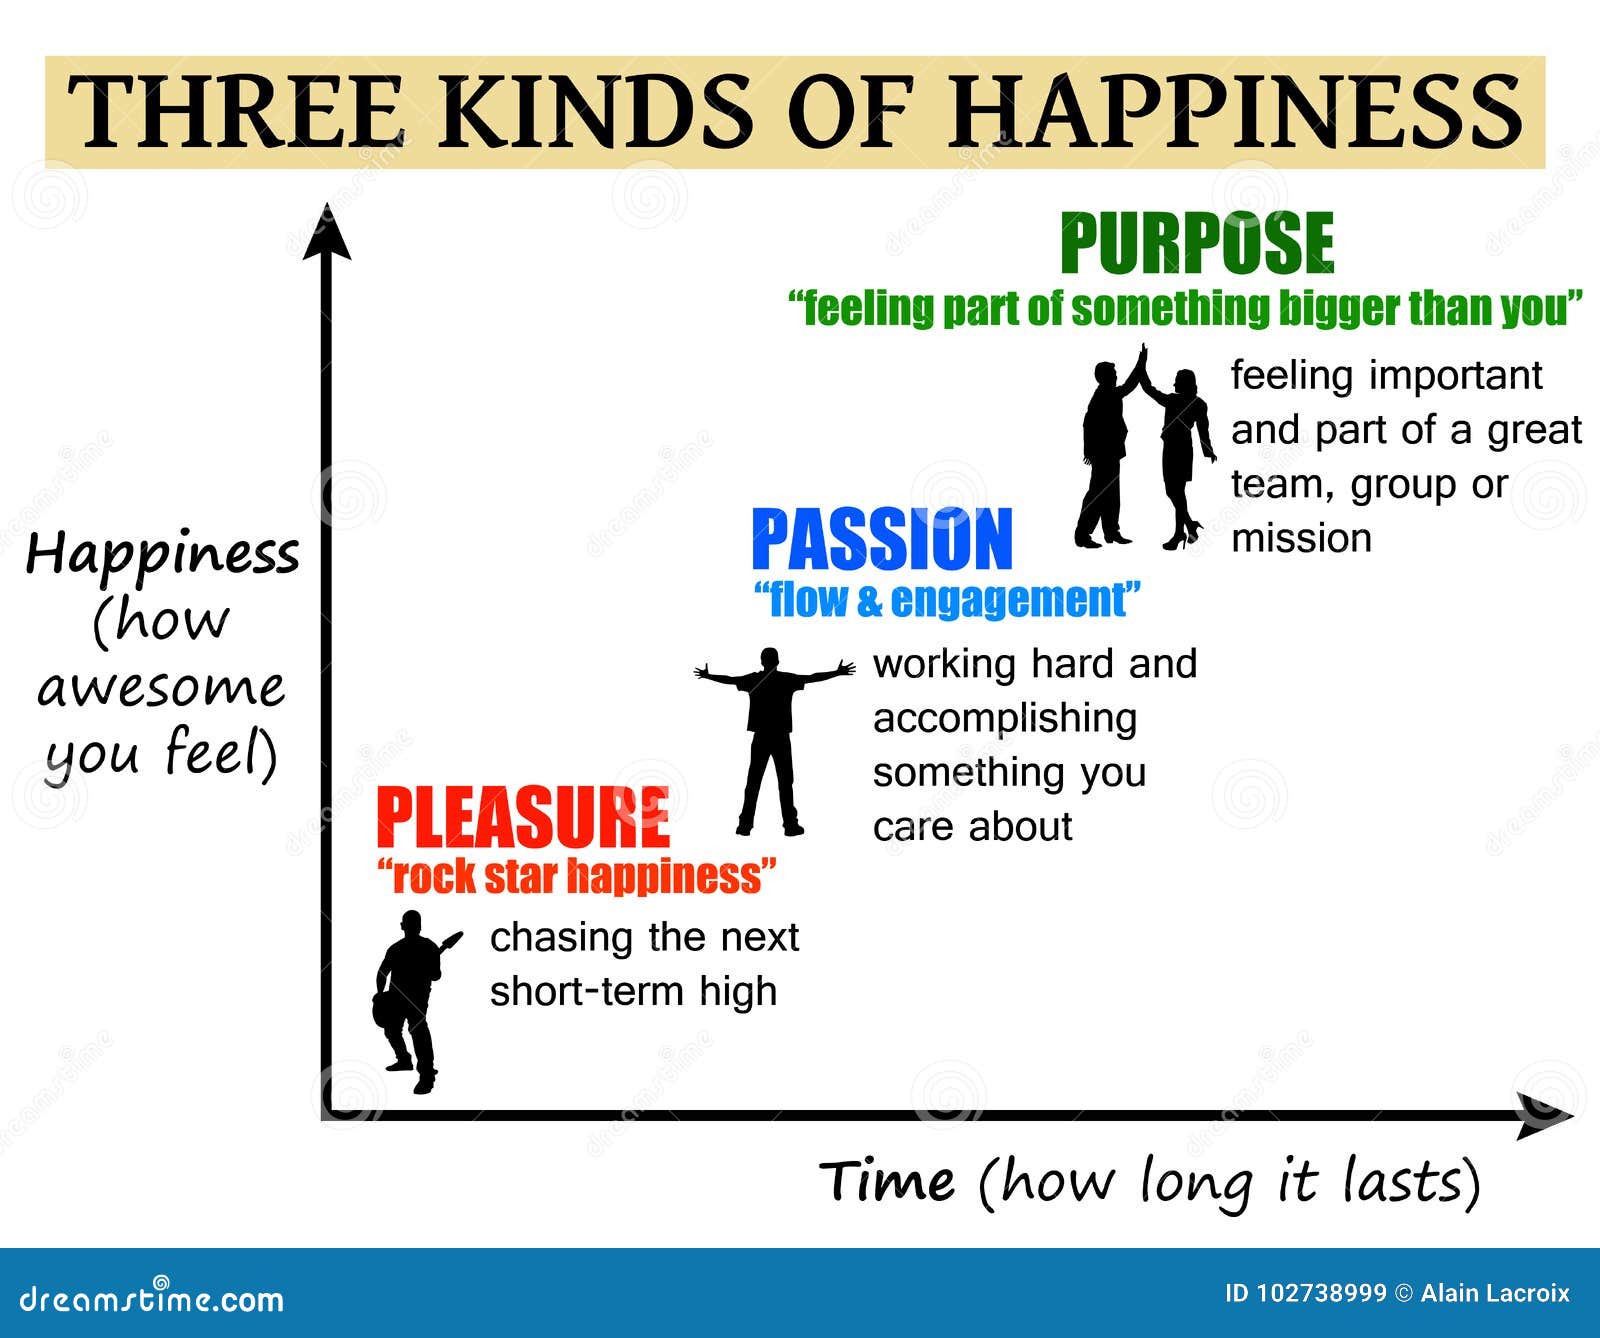 happiness pleasure passion purpose